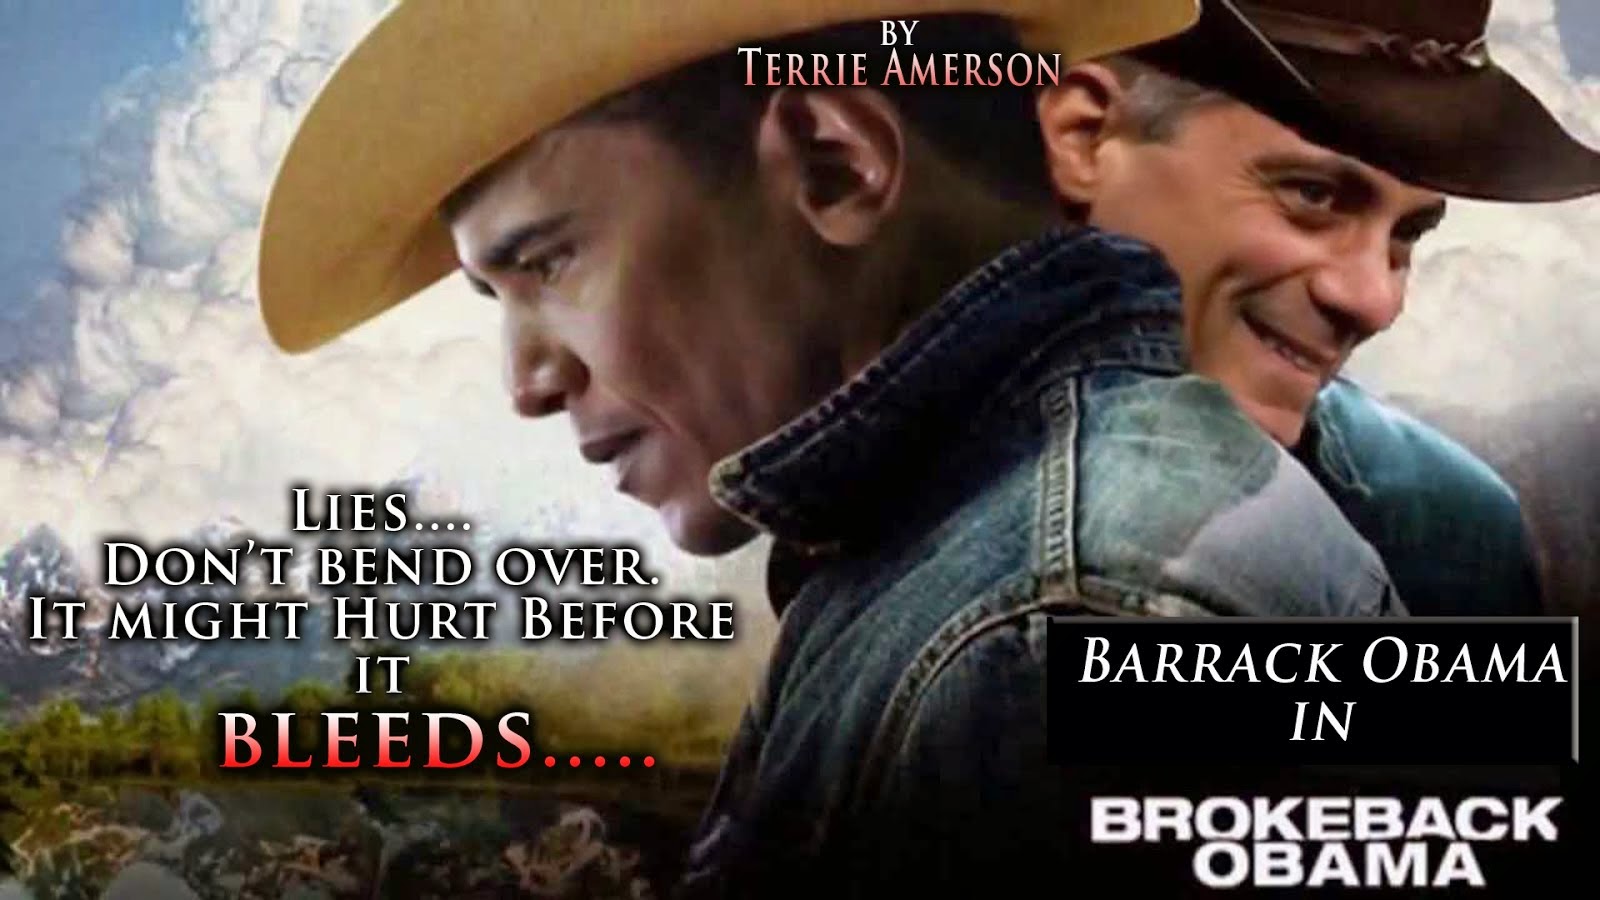 Brokeback Obama GETS HIS IN THE END